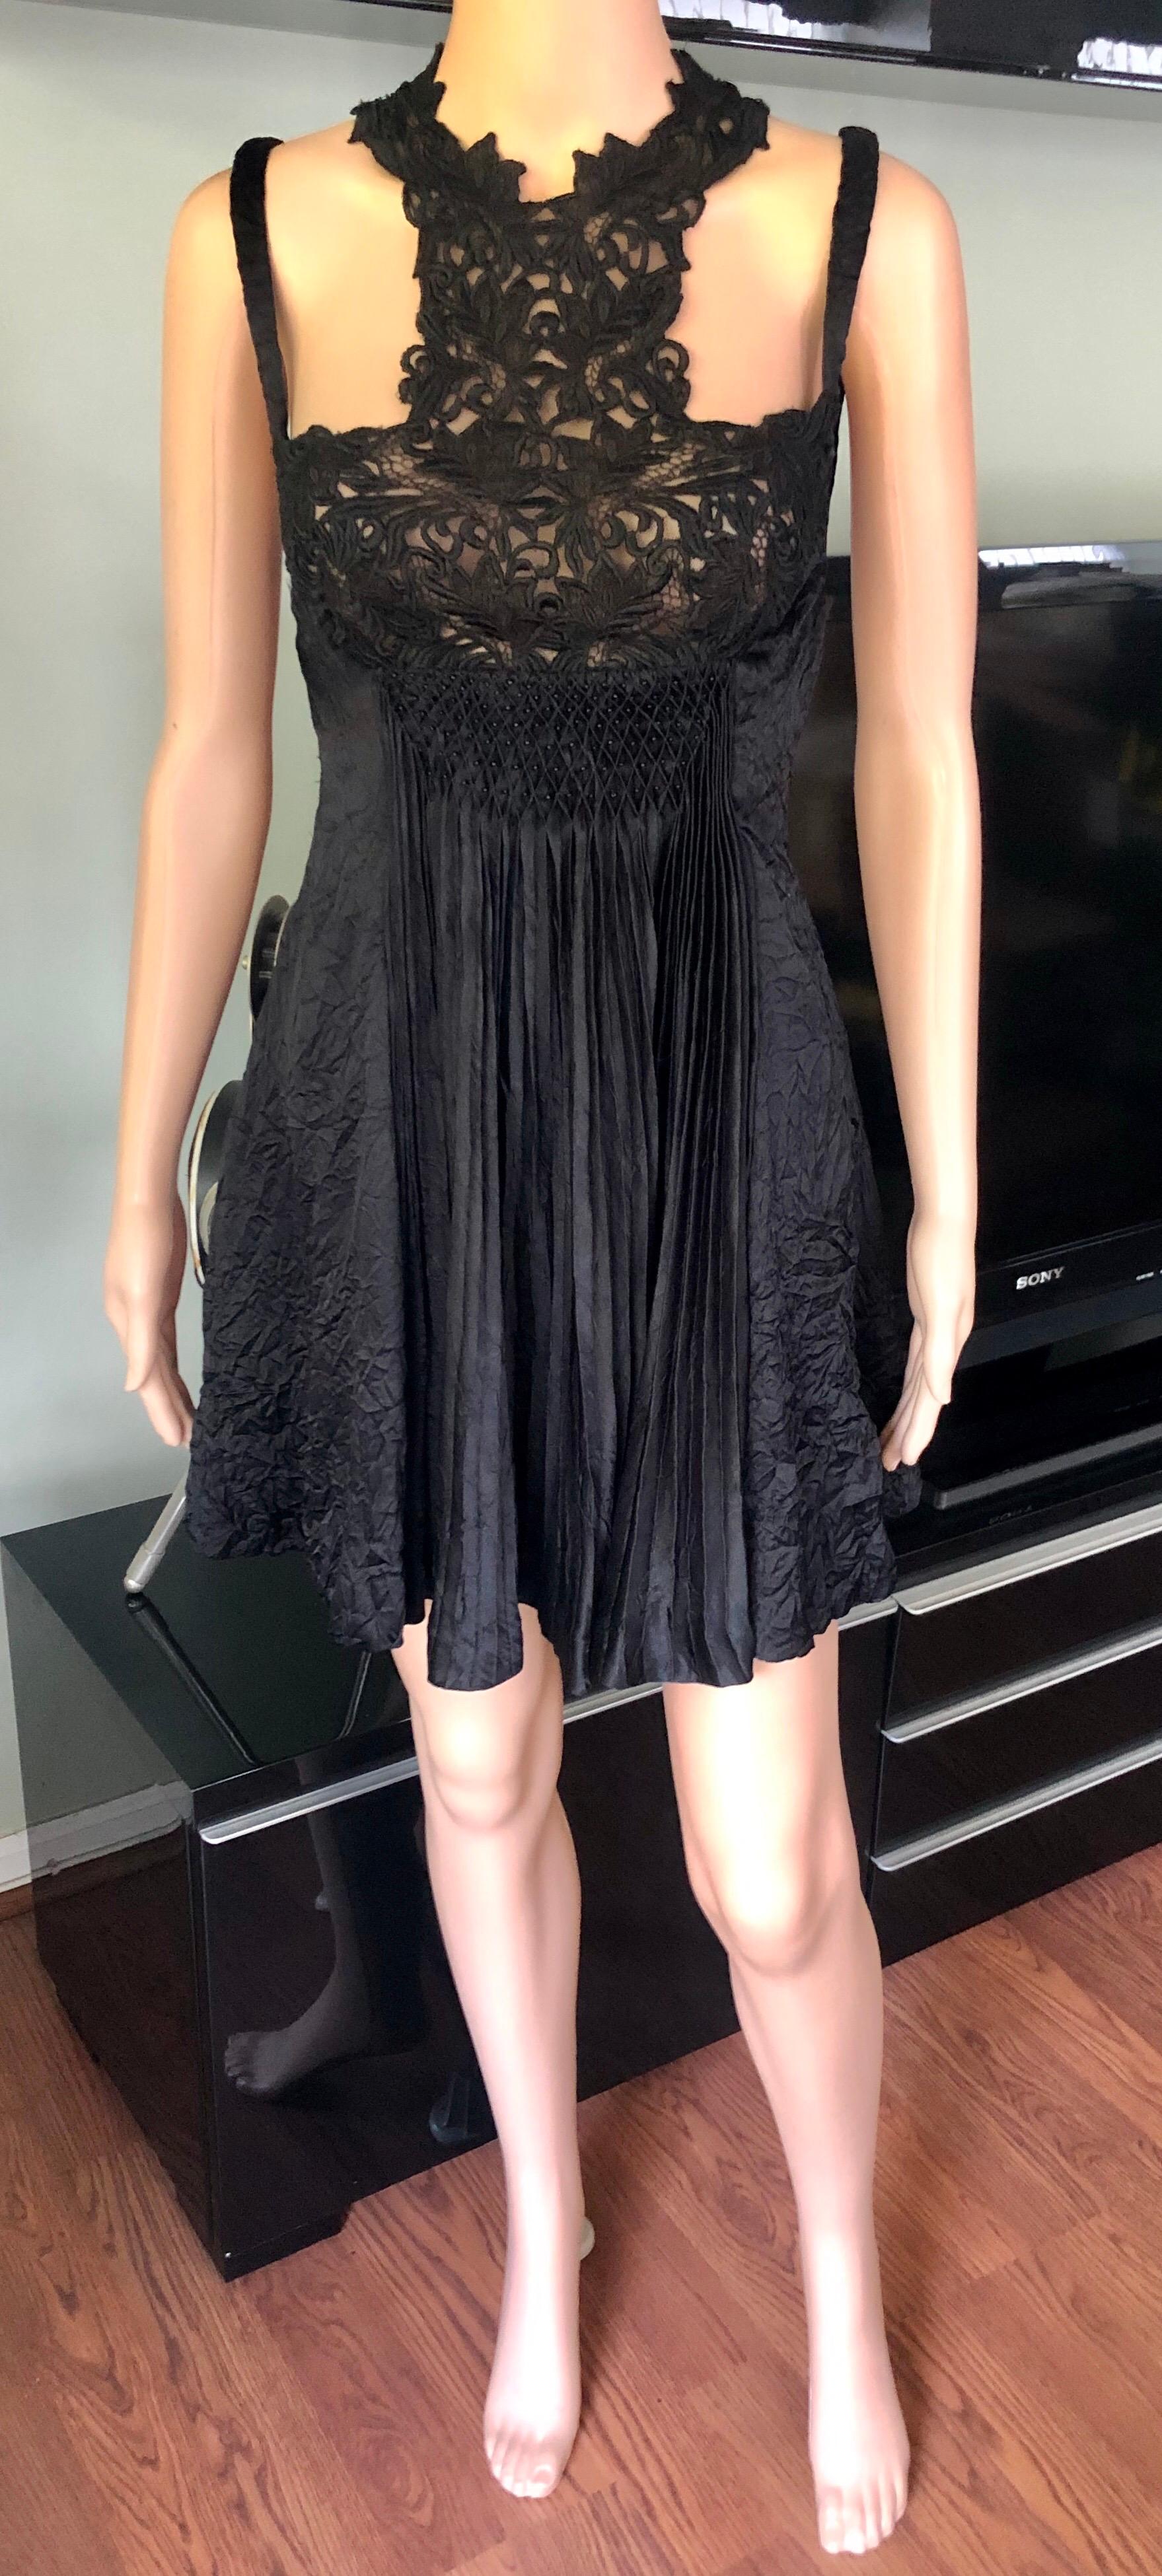 gianni versace black lace dress